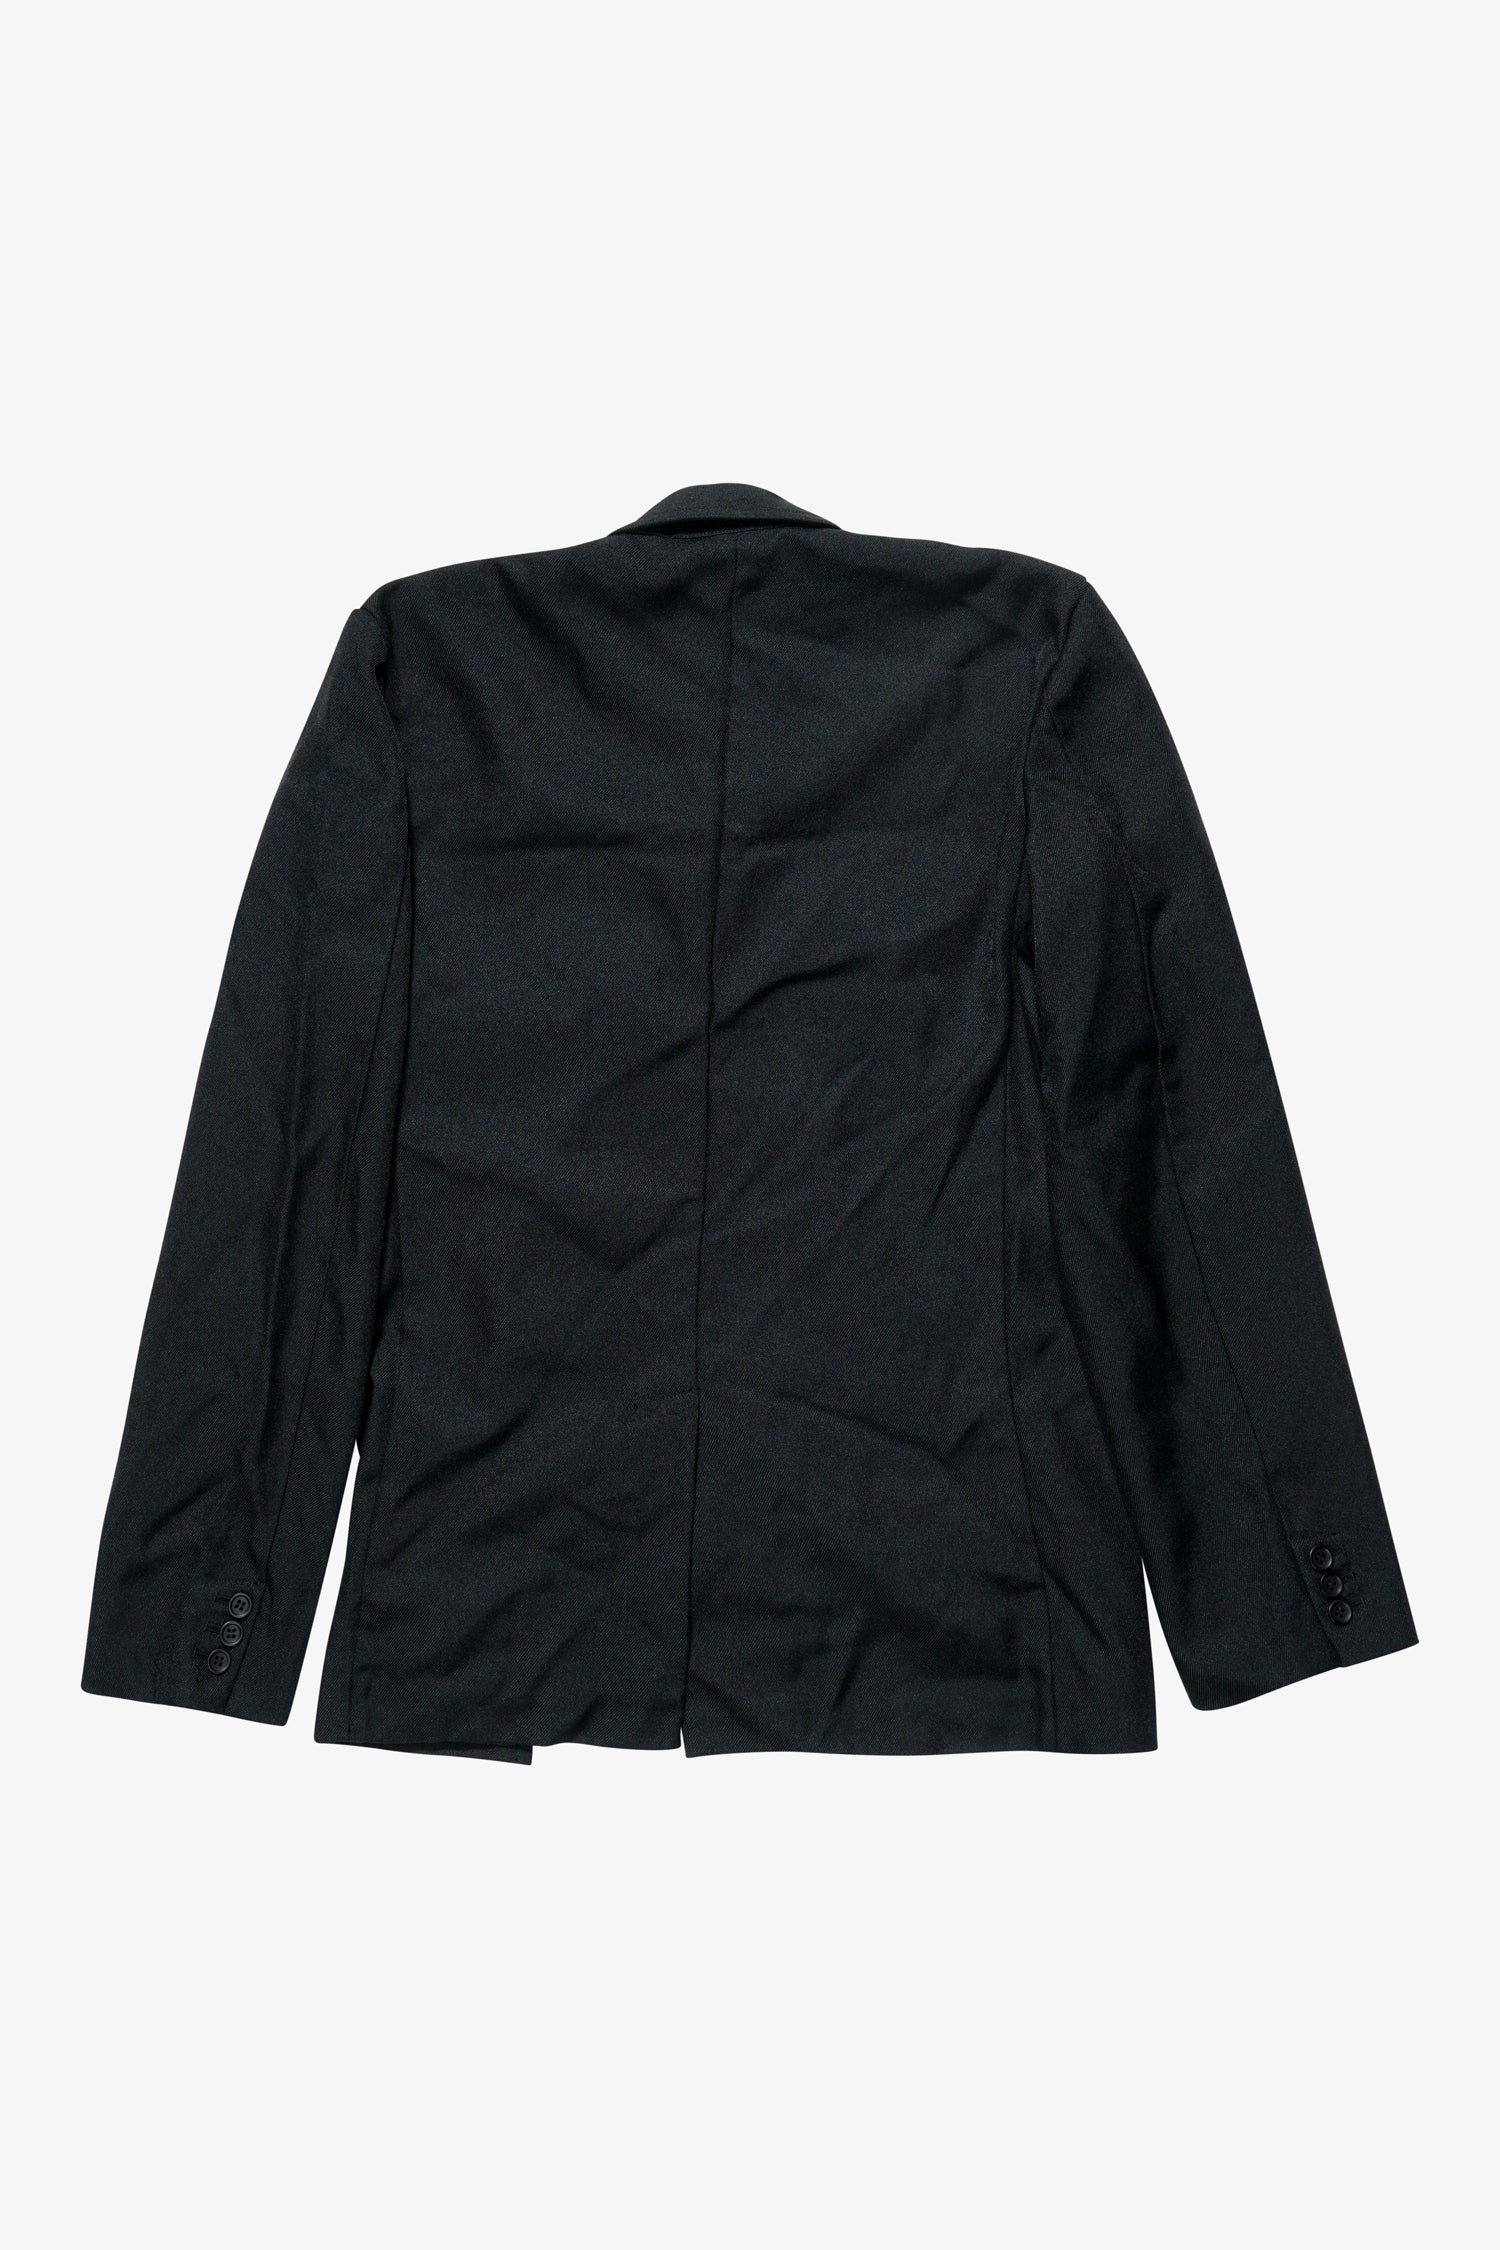 Selectshop FRAME - COMME DES GARCONS BLACK Deconstructed Cardigan Blazer Sweatshirt Dubai